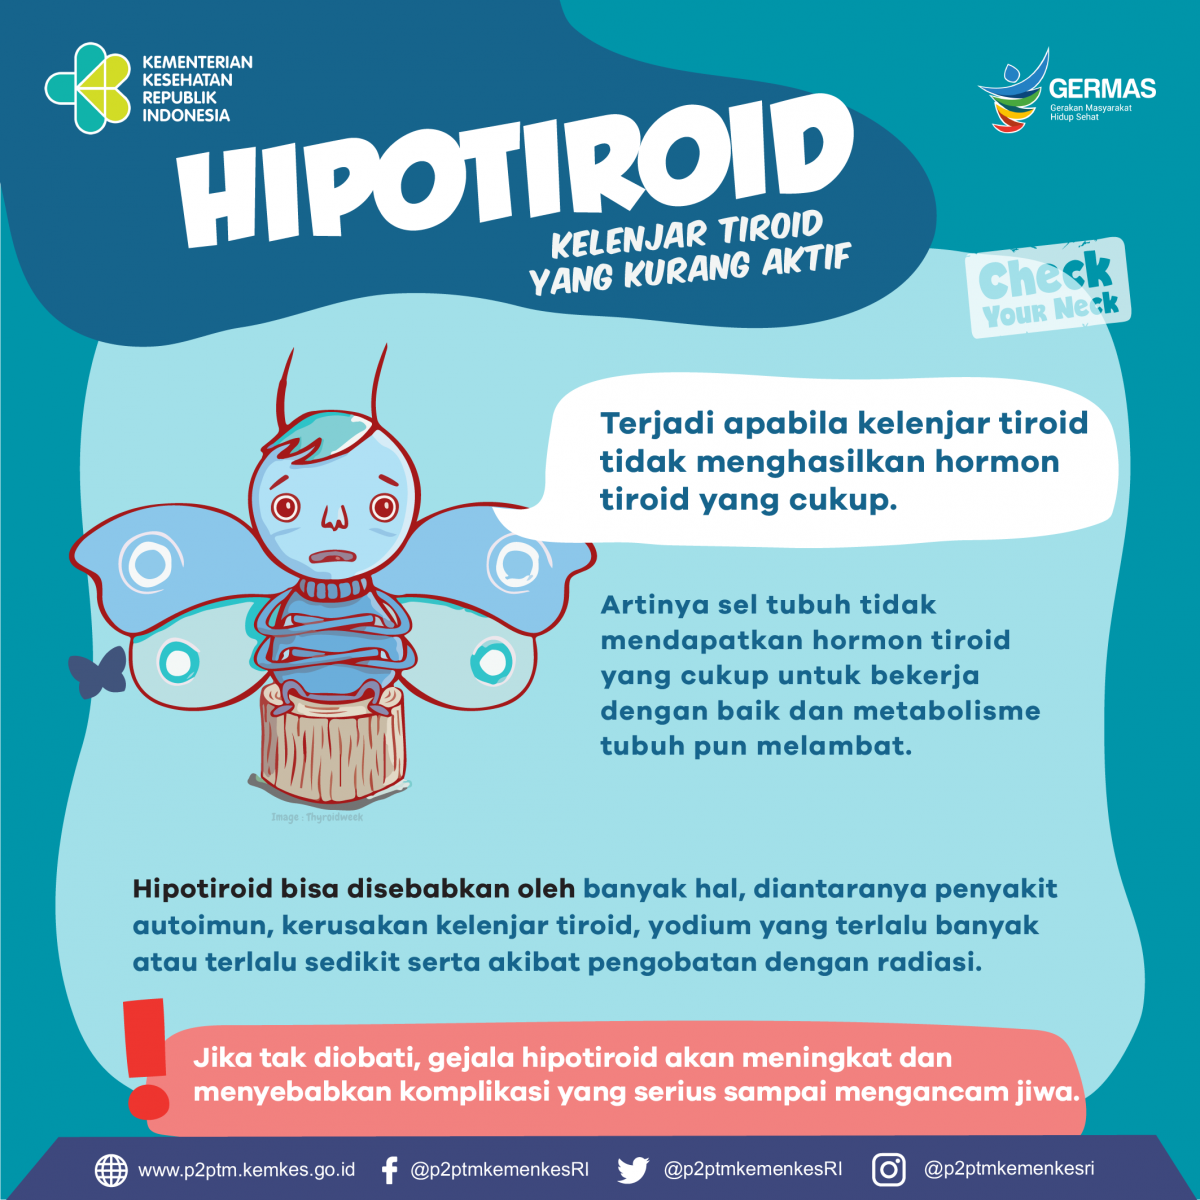 Apa itu Hipotiroid, si kelenjar tiroid yang kurang aktif?